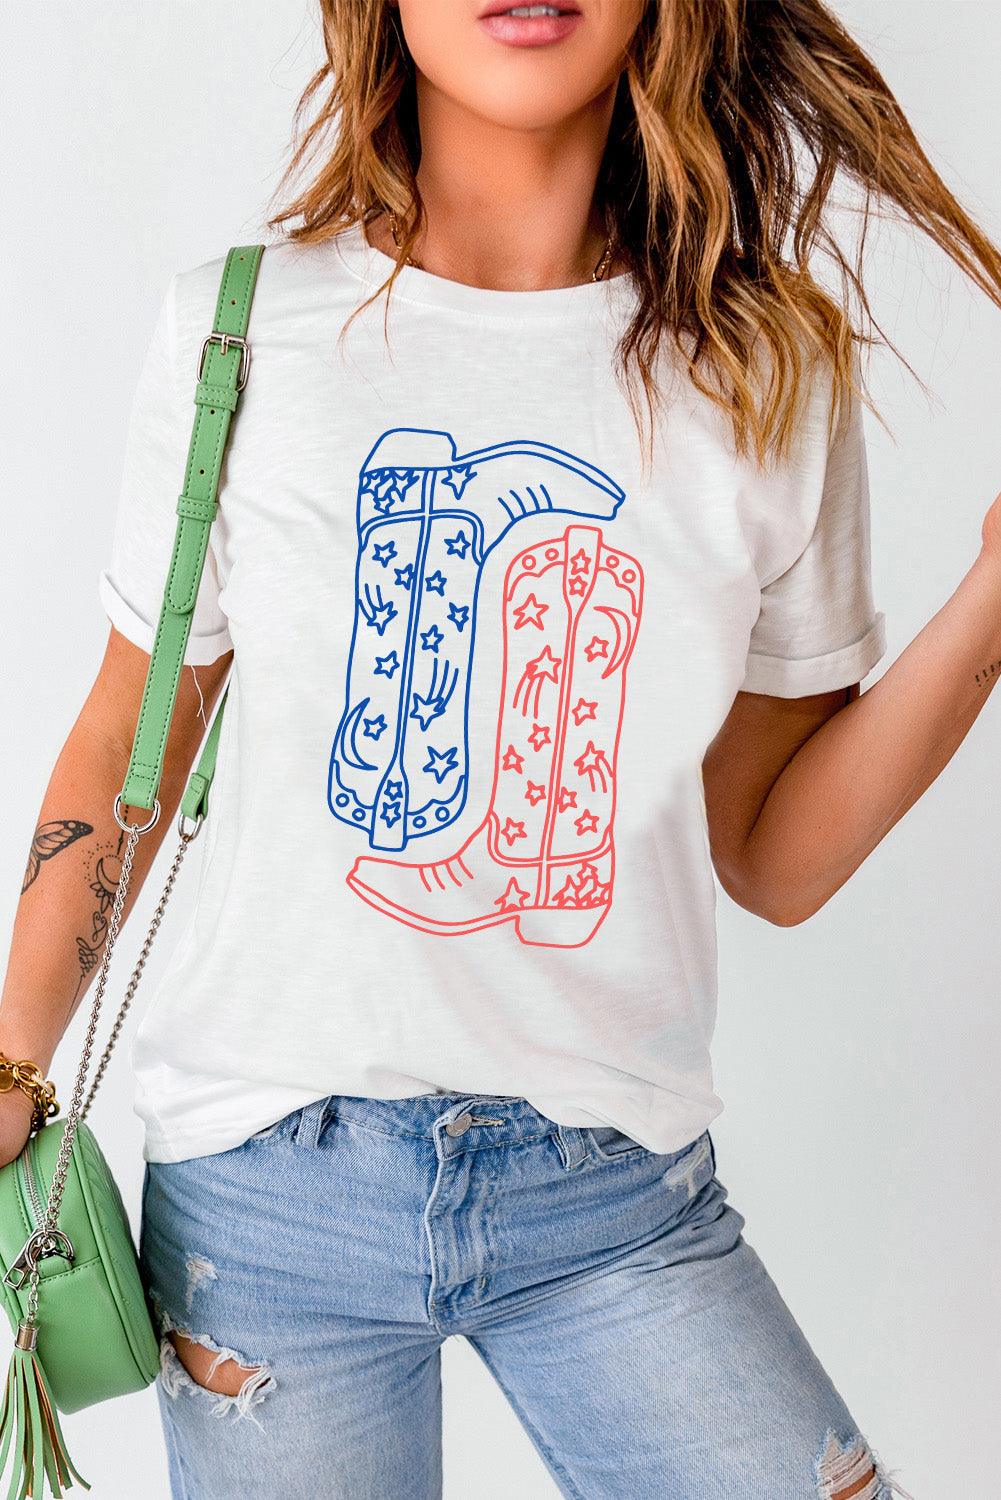 White Western Star Boots Print Round Neck Graphic T Shirt - L & M Kee, LLC